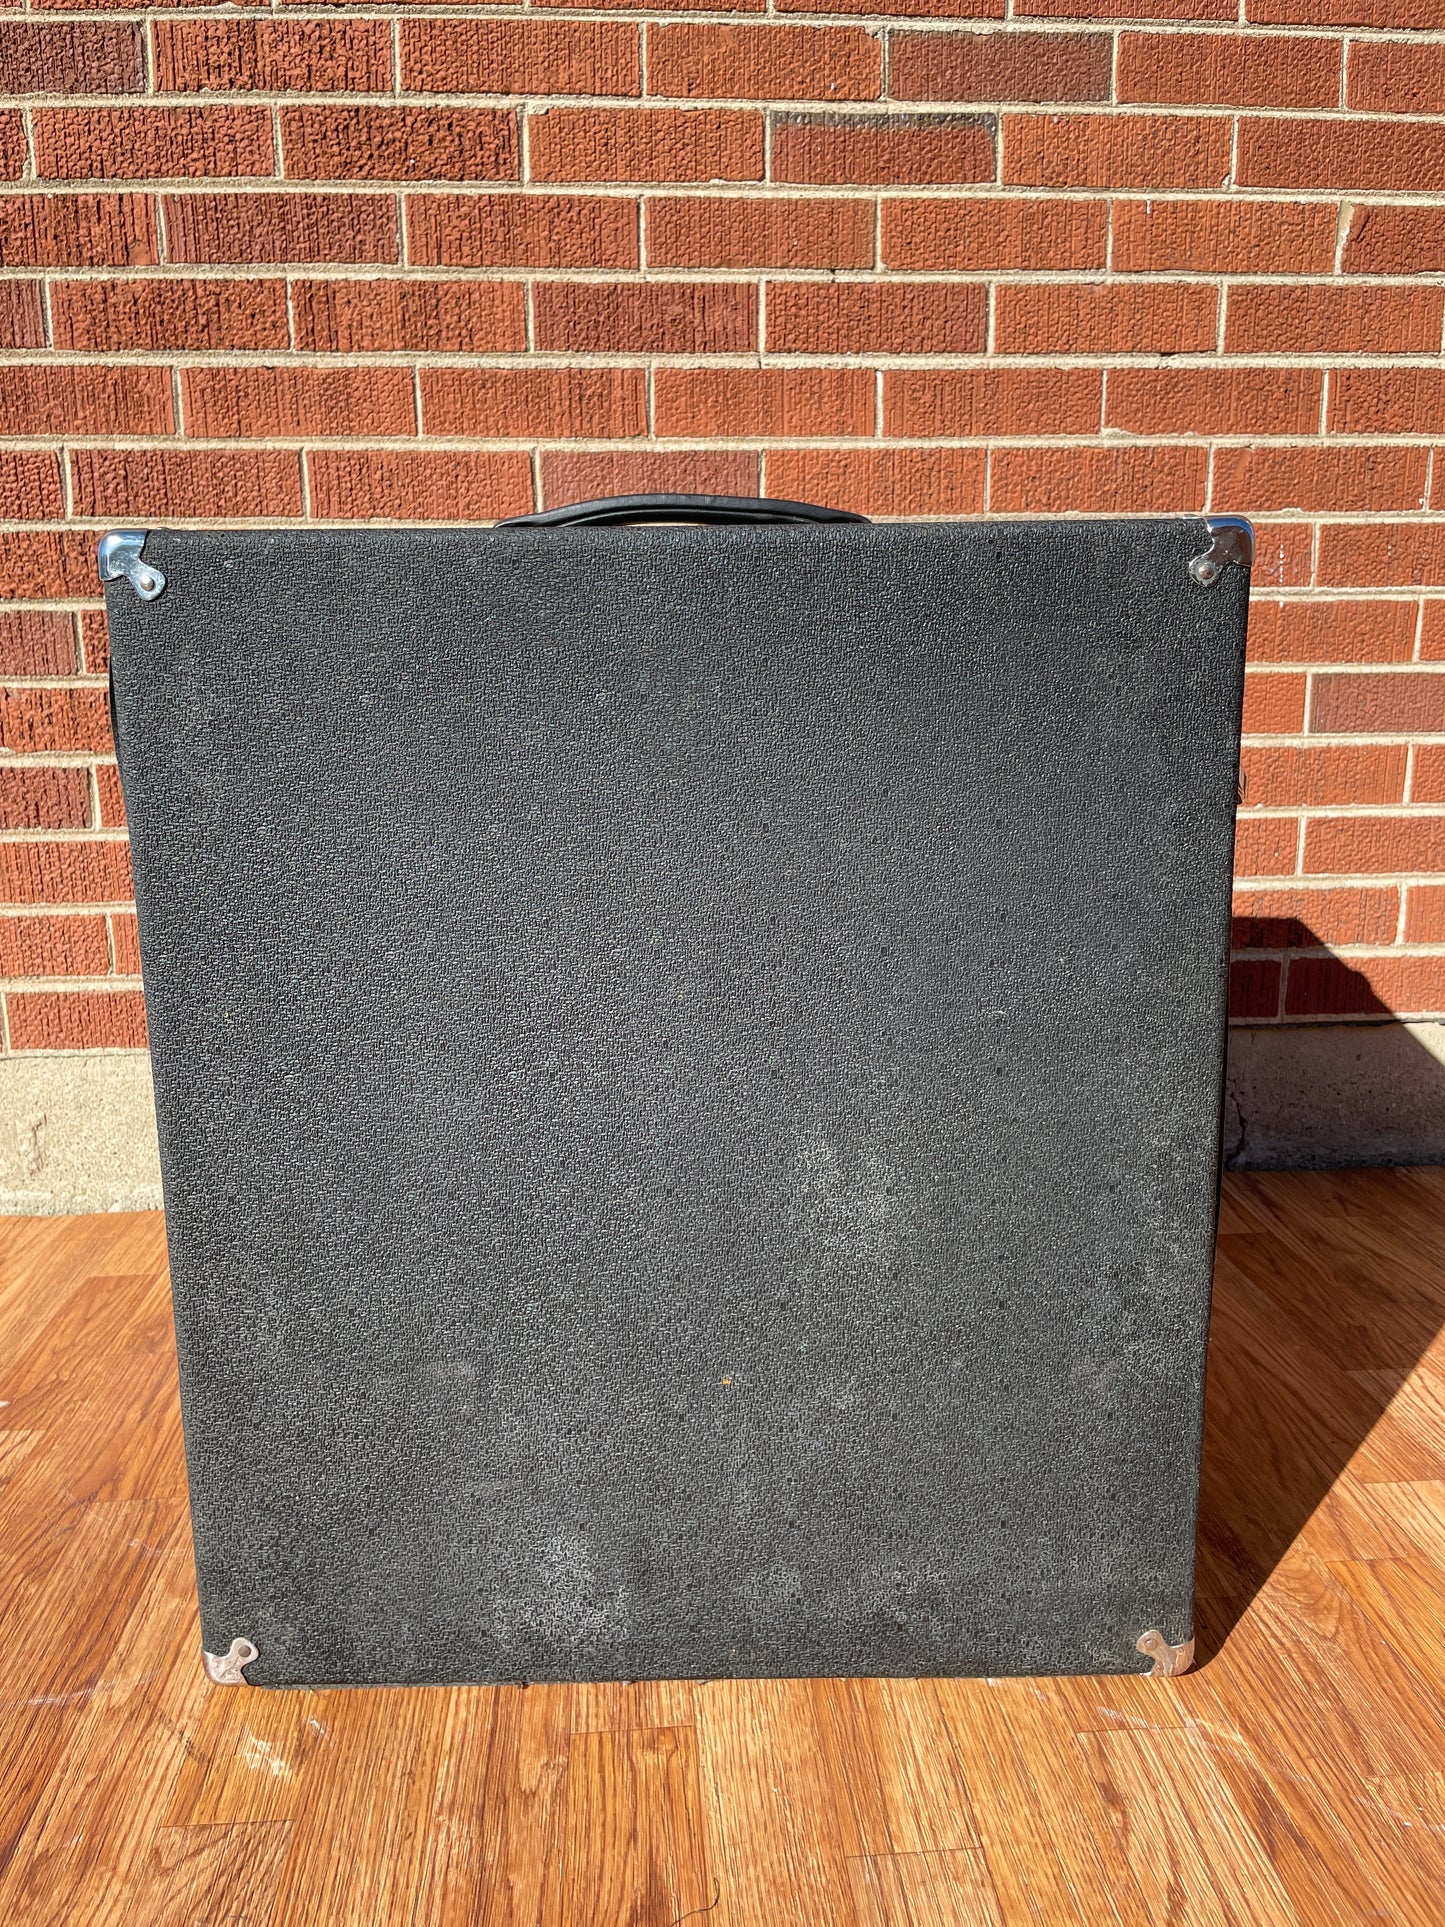 1967 Ampeg 1x15 Portaflex Flip Top Bass Cabinet w/ Original CTS Speaker